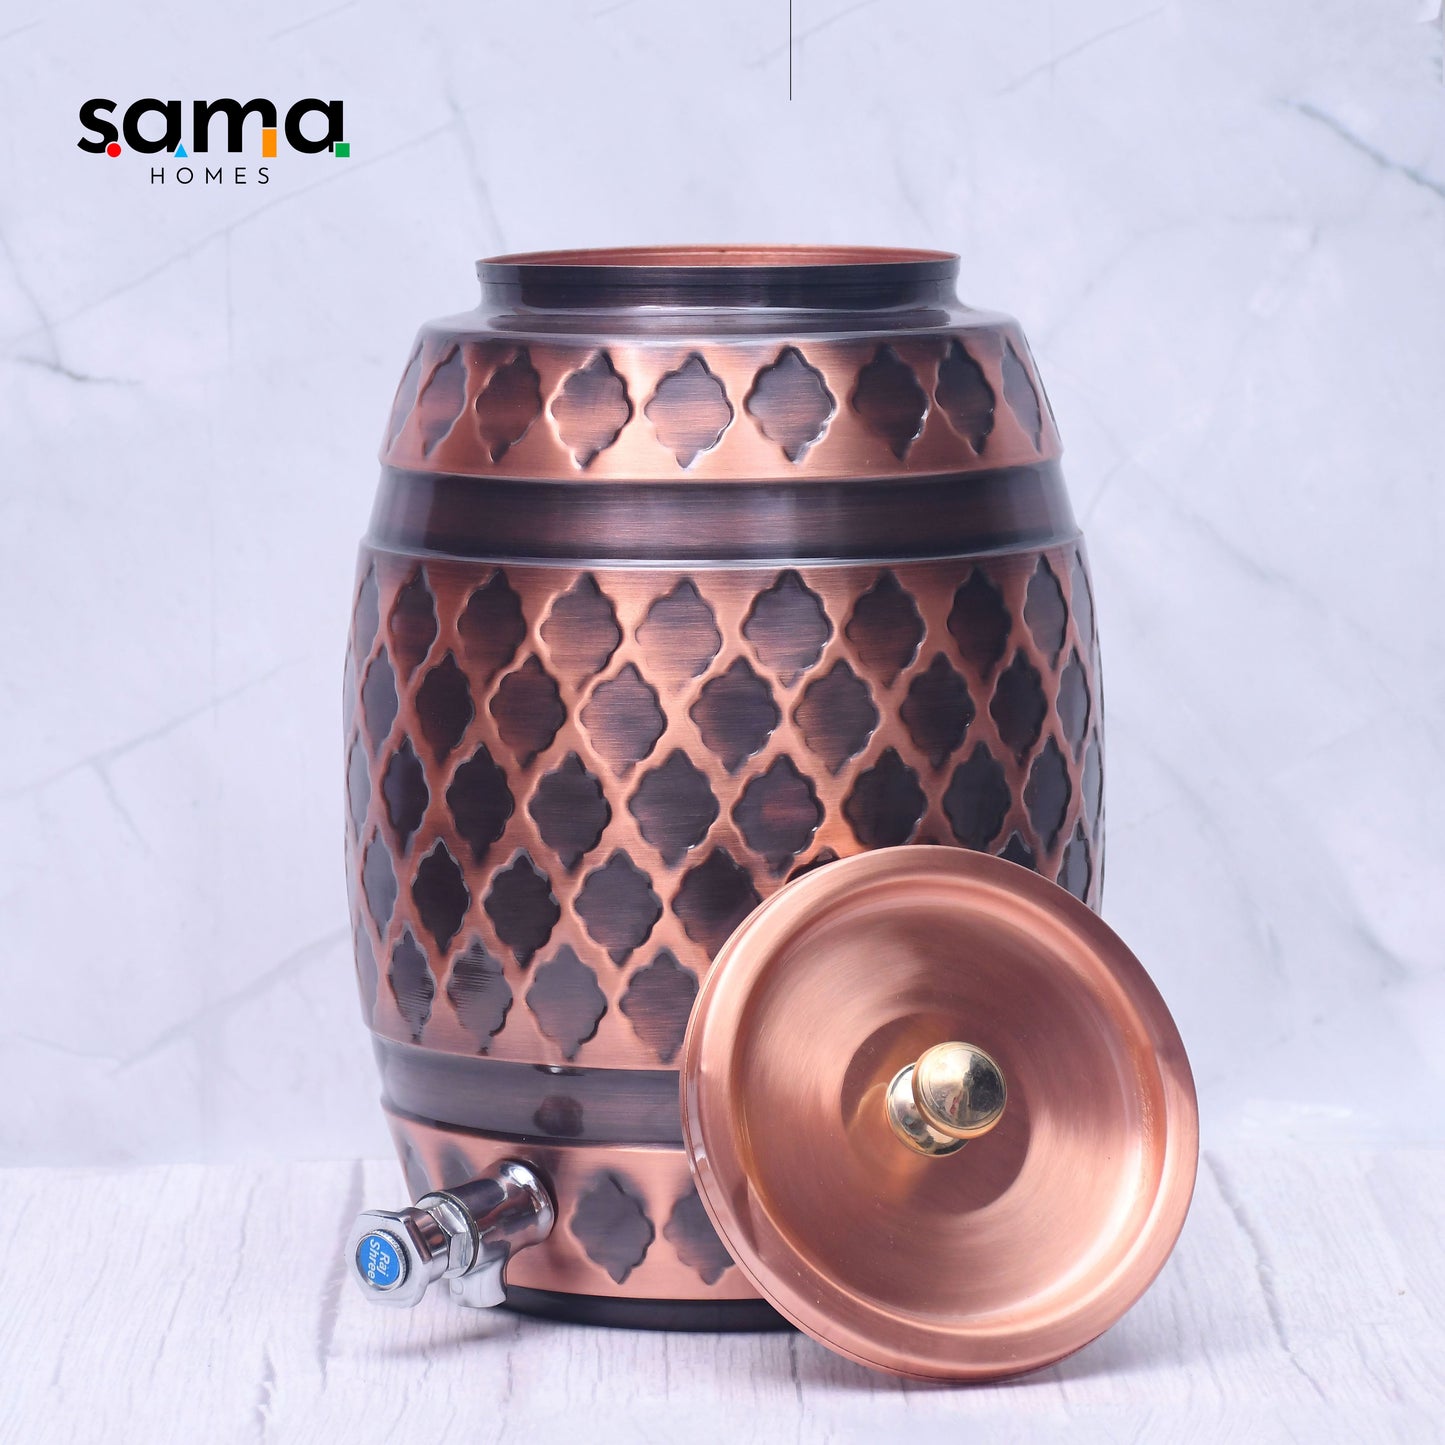 SAMA Homes - pure copper barrel kangura designed capacity 8000 ml